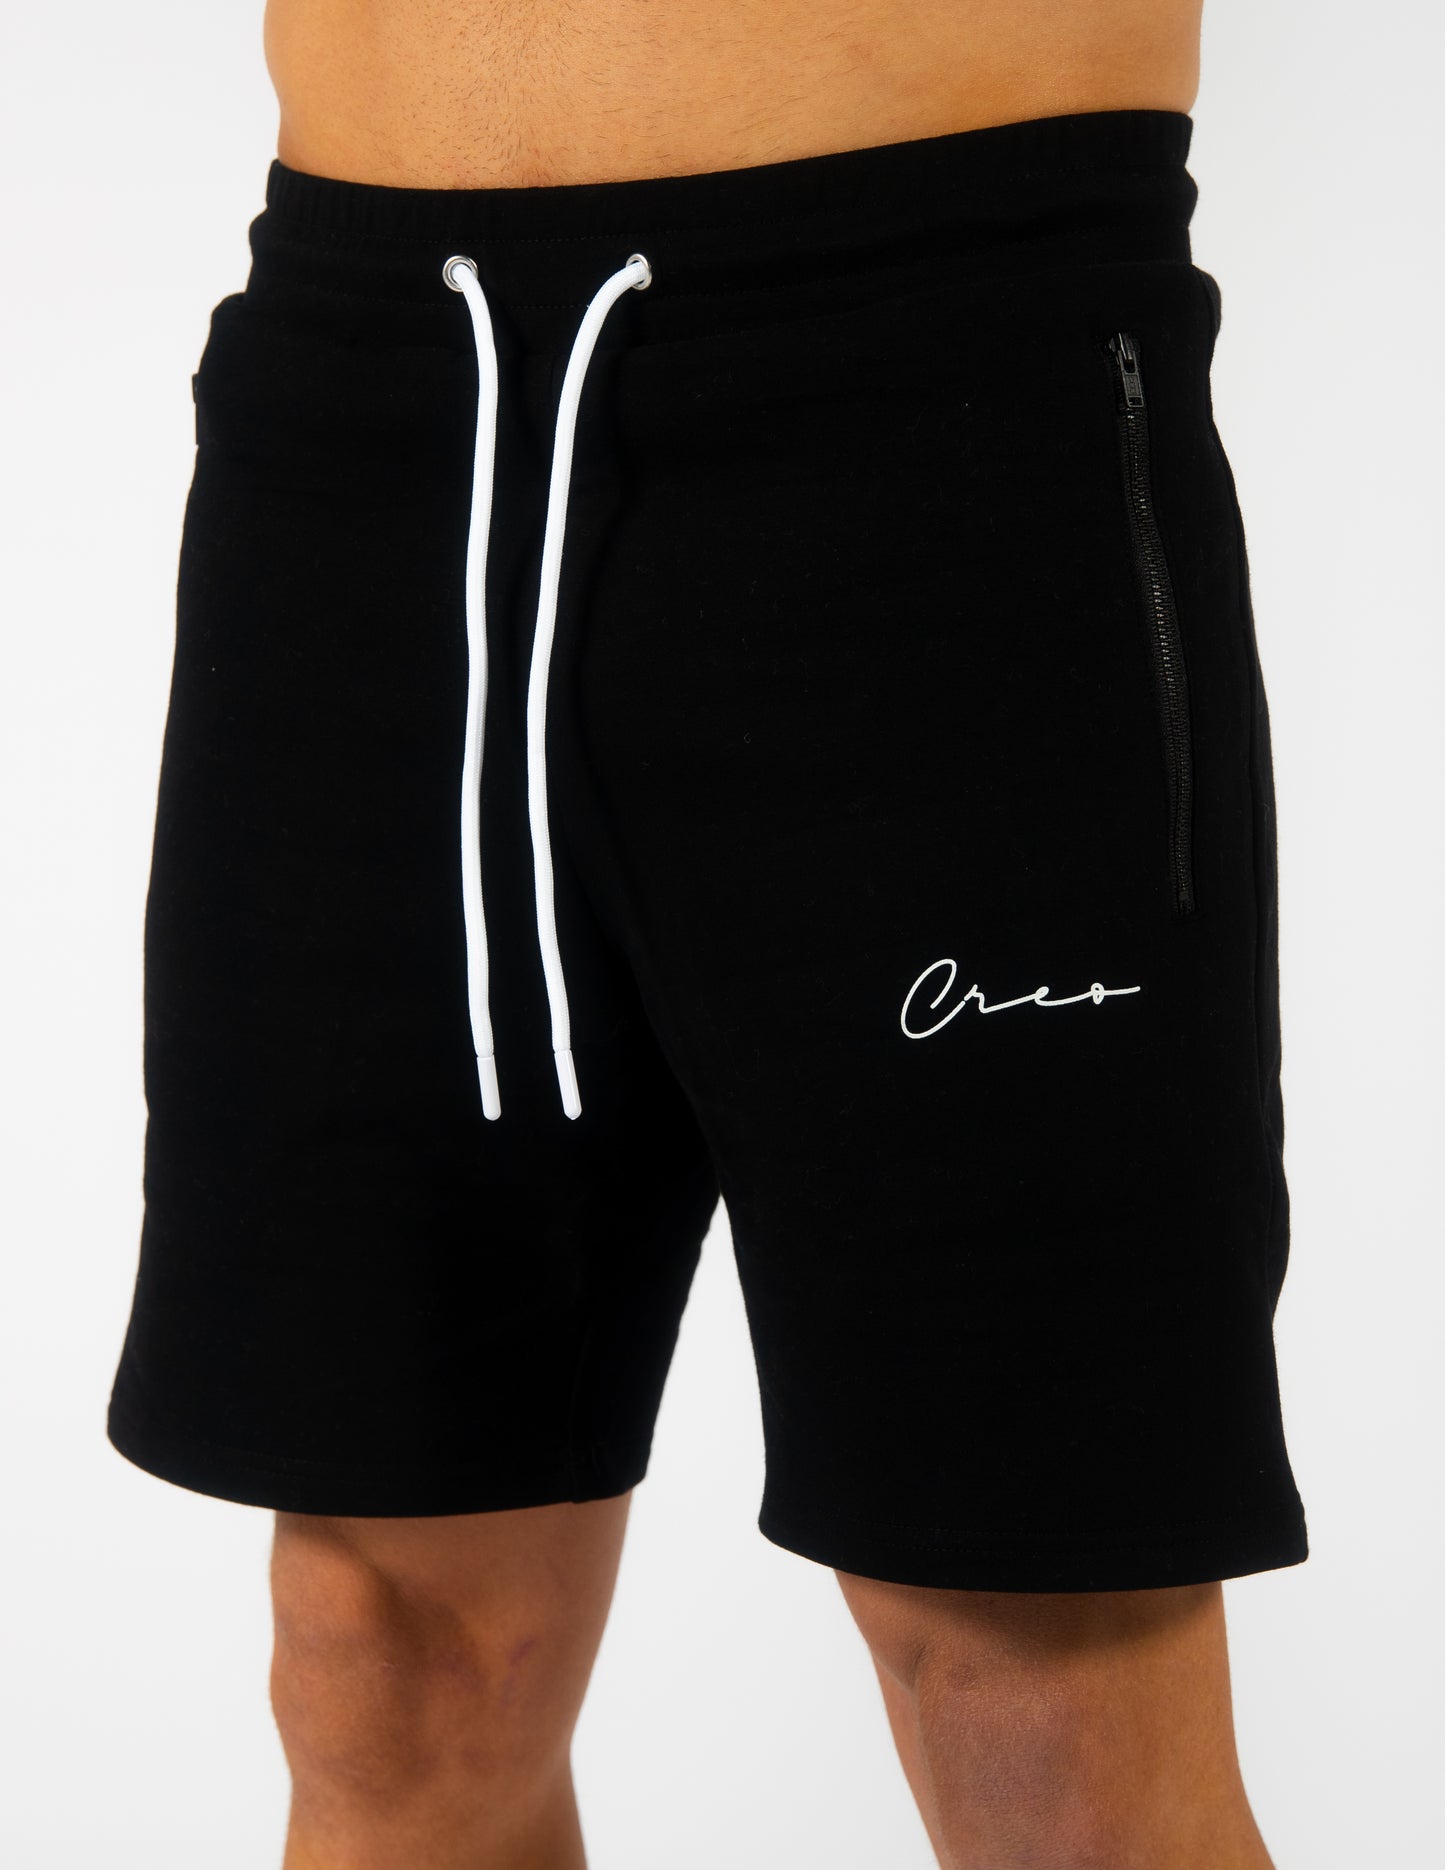 Essentials Shorts - Black